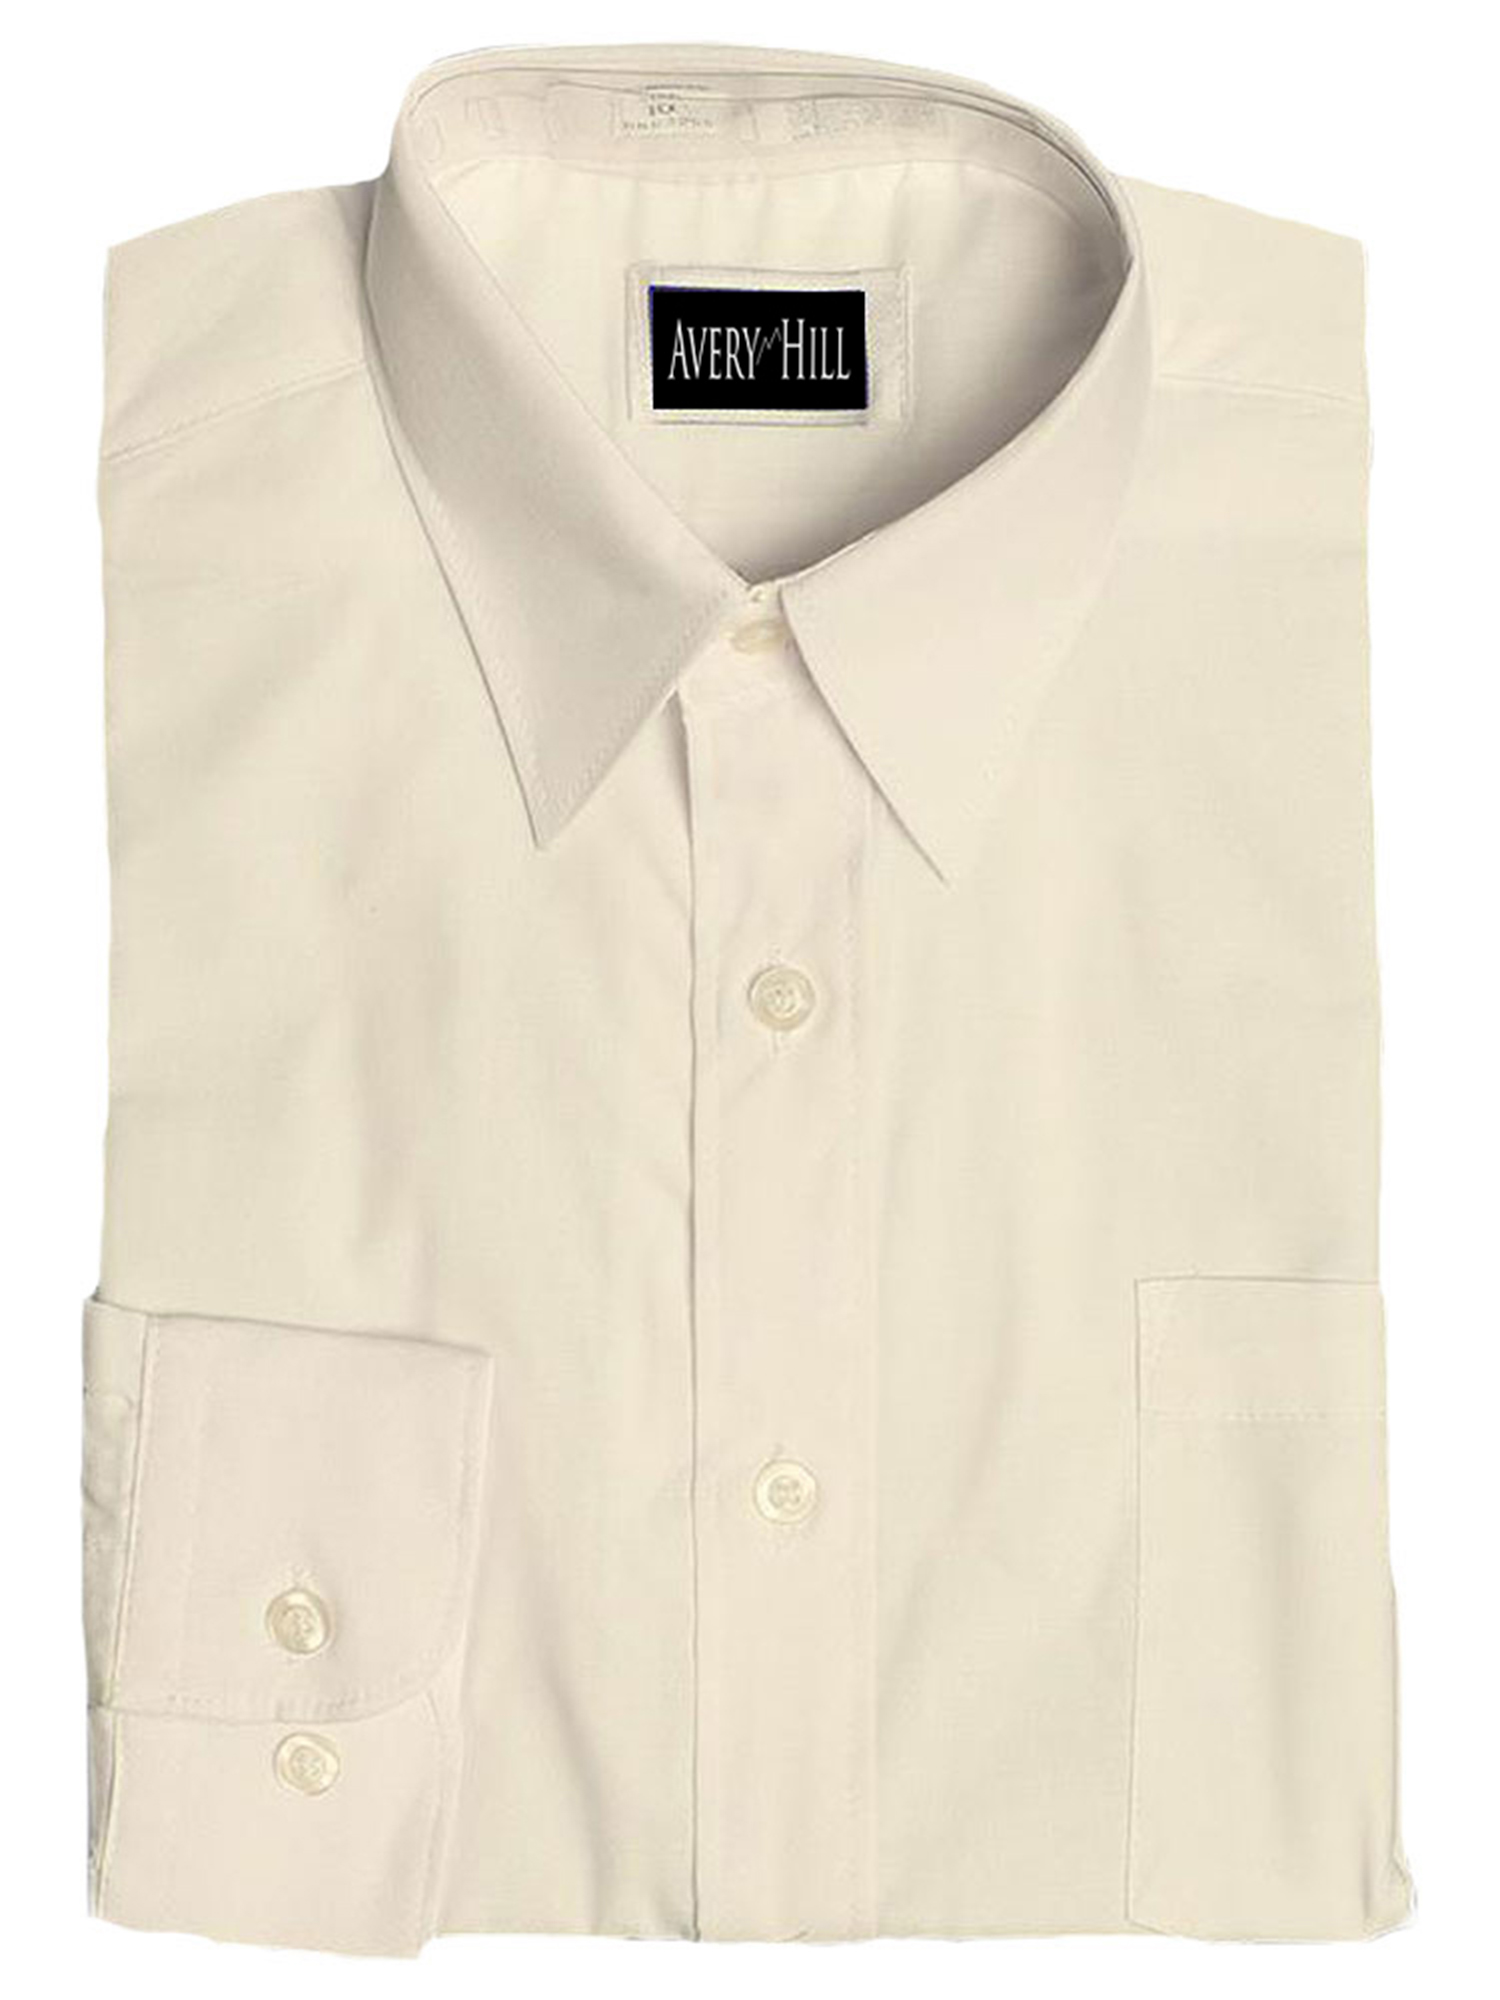 Boys White or Ivory Long Sleeve Wrinkle Resistant Dress Shirt IV 7